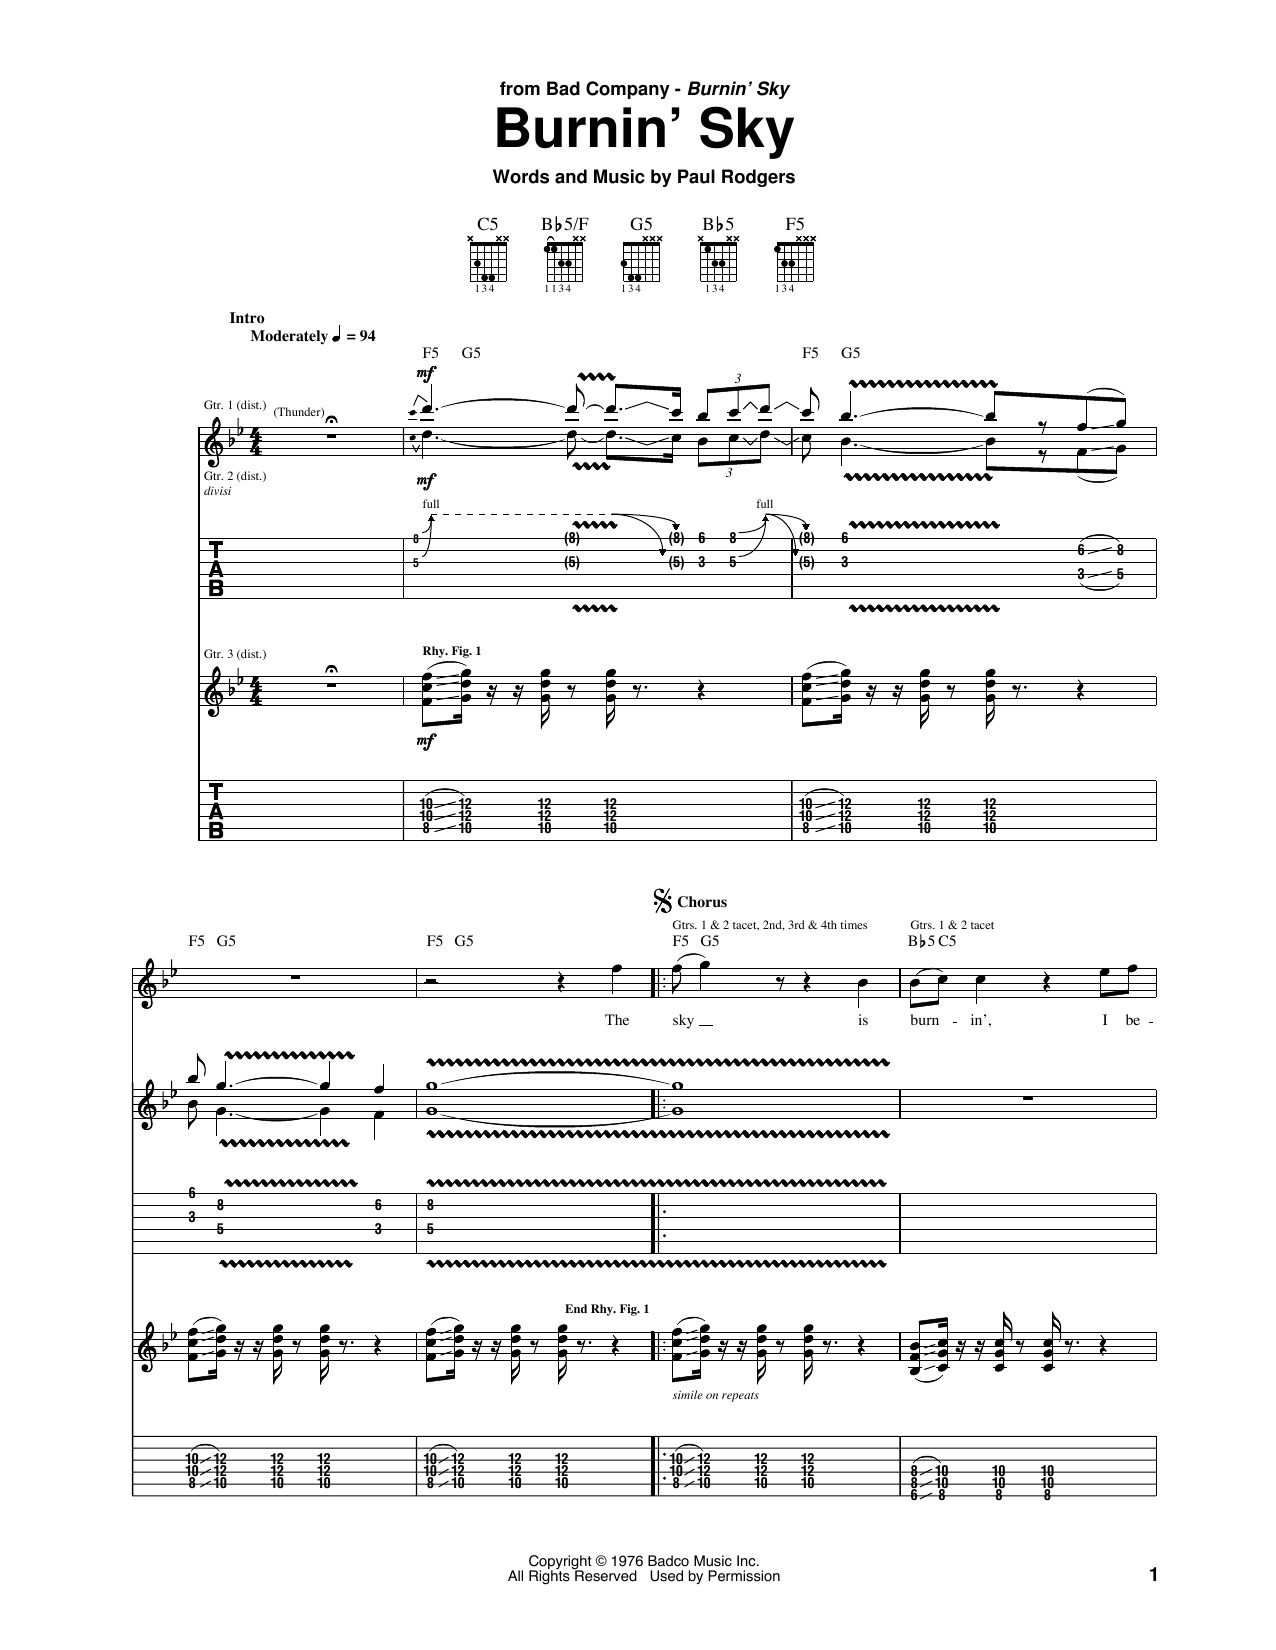 Bad Company Burnin' Sky Sheet Music Notes & Chords for Guitar Tab - Download or Print PDF